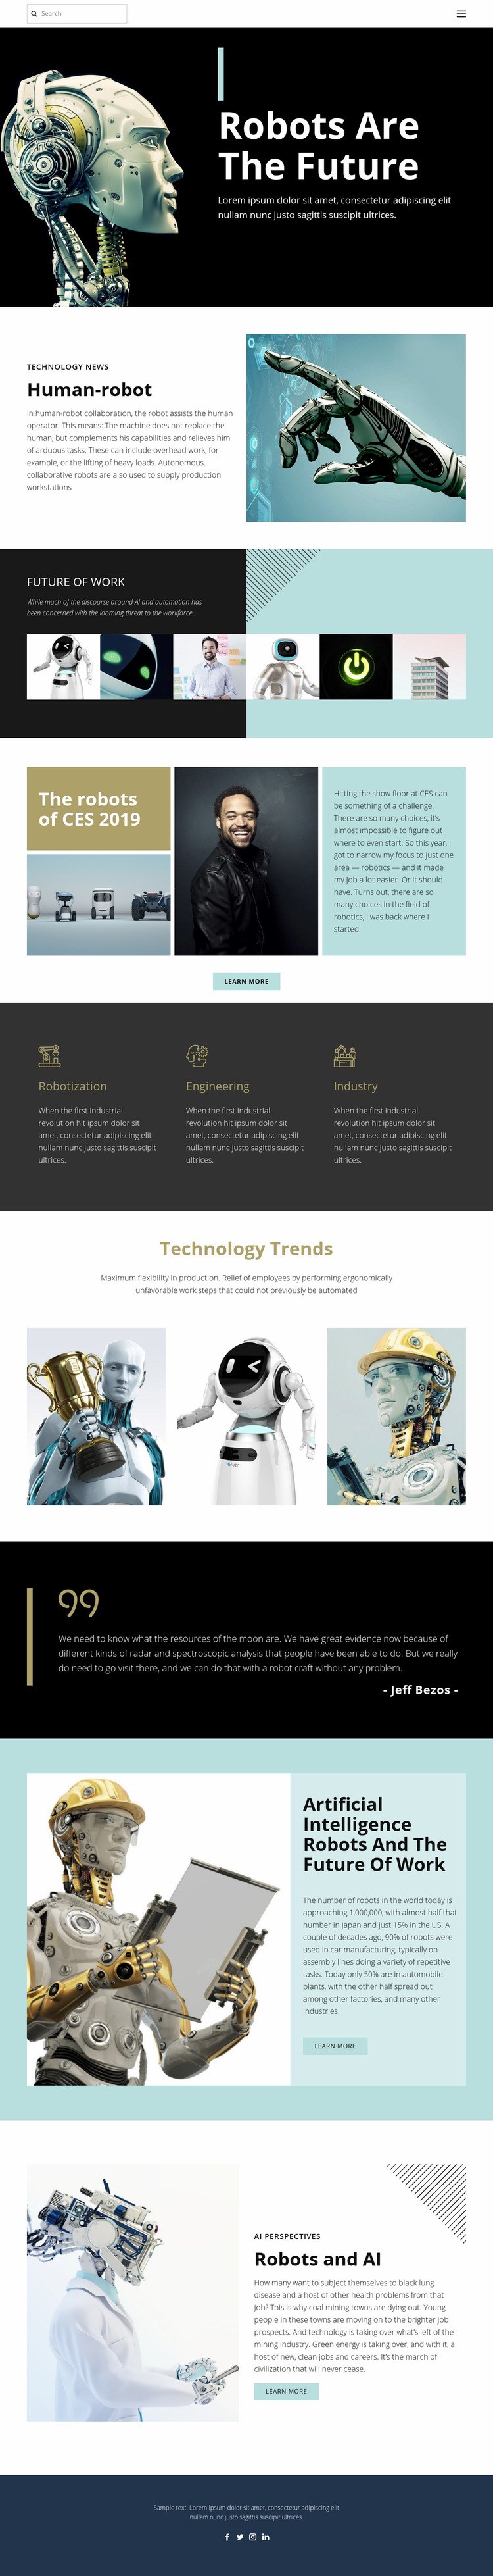 Already future technology Web Page Design